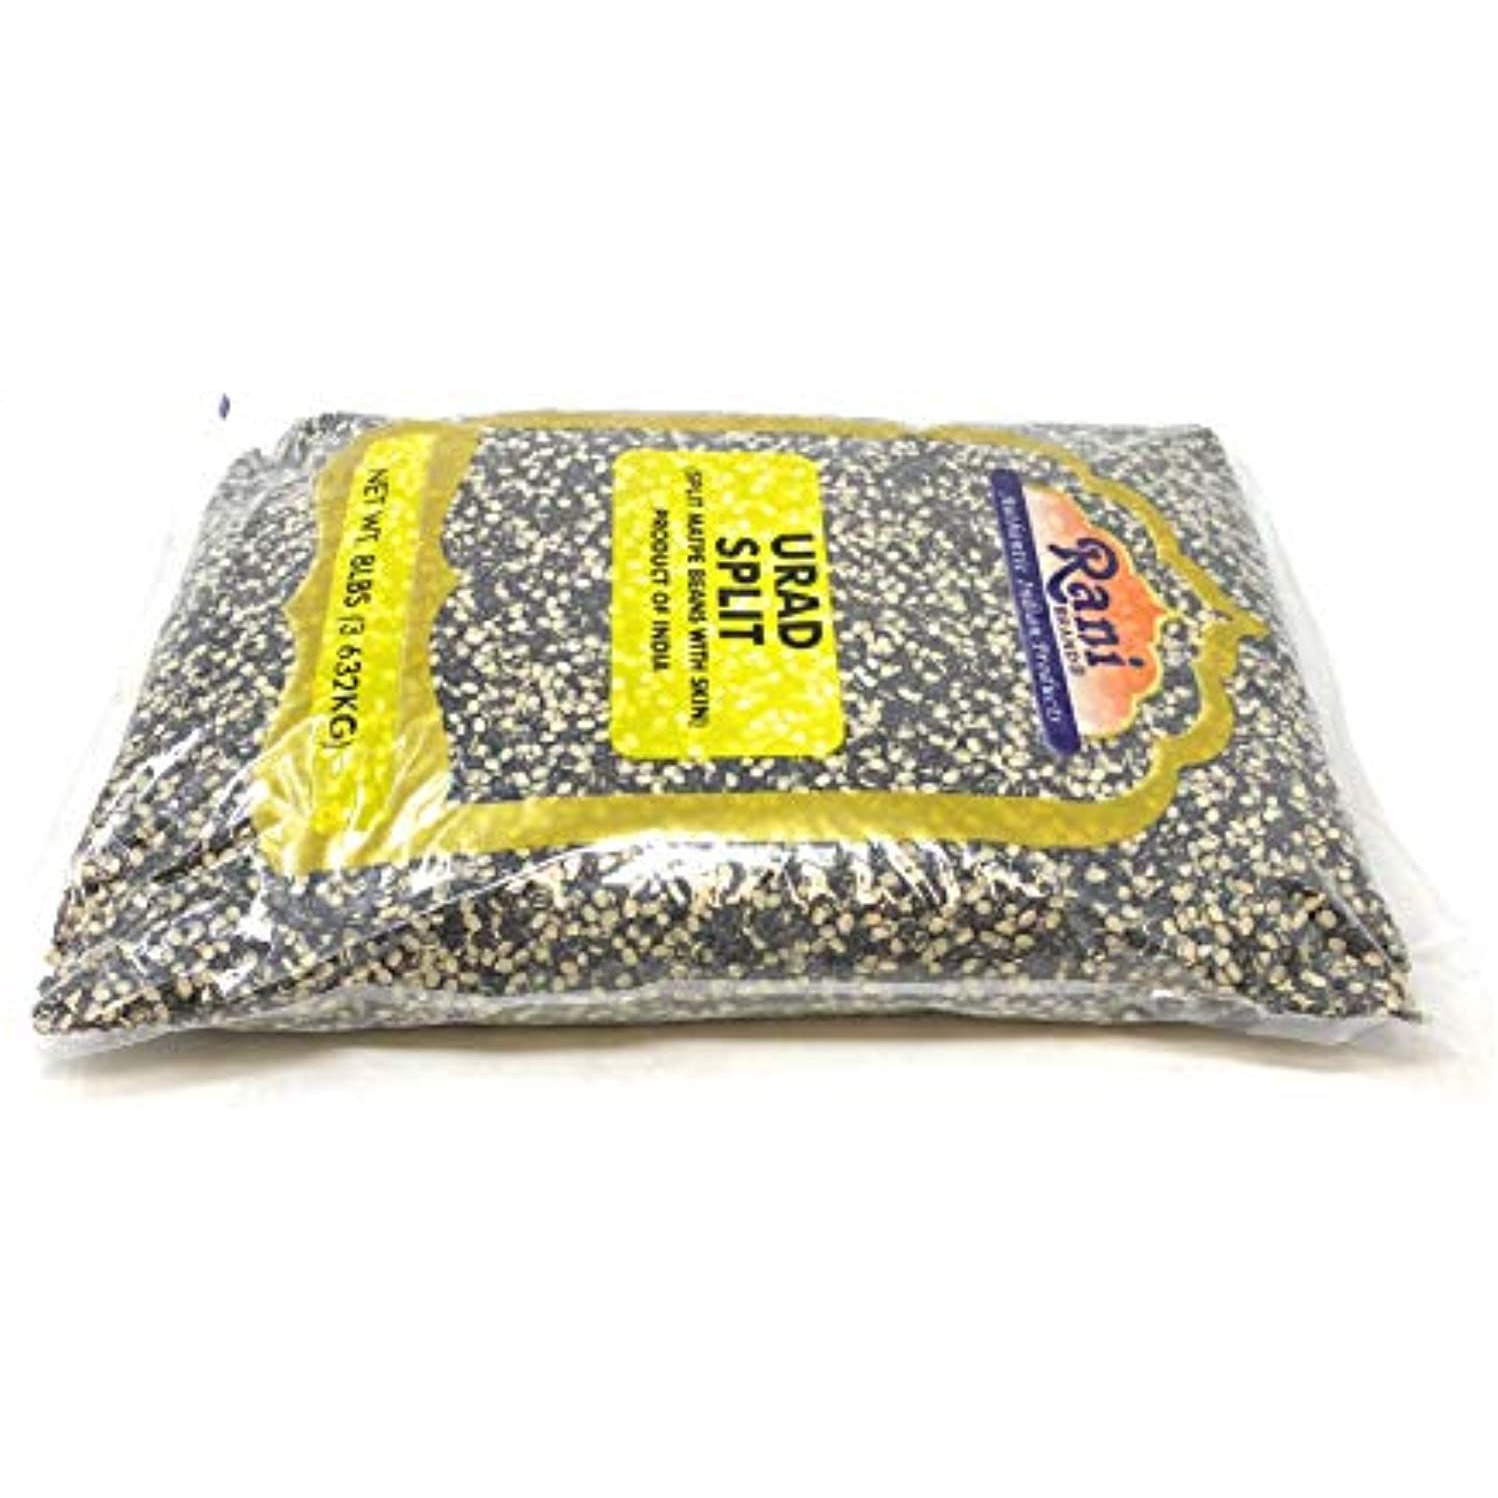 Rani Urid / Urad Split (Matpe beans split with skin) Indian Lentils 8lbs (128oz) 8 Pound ~ All Natural | Indian Origin | Gluten Friendly | NON-GMO | Vegan